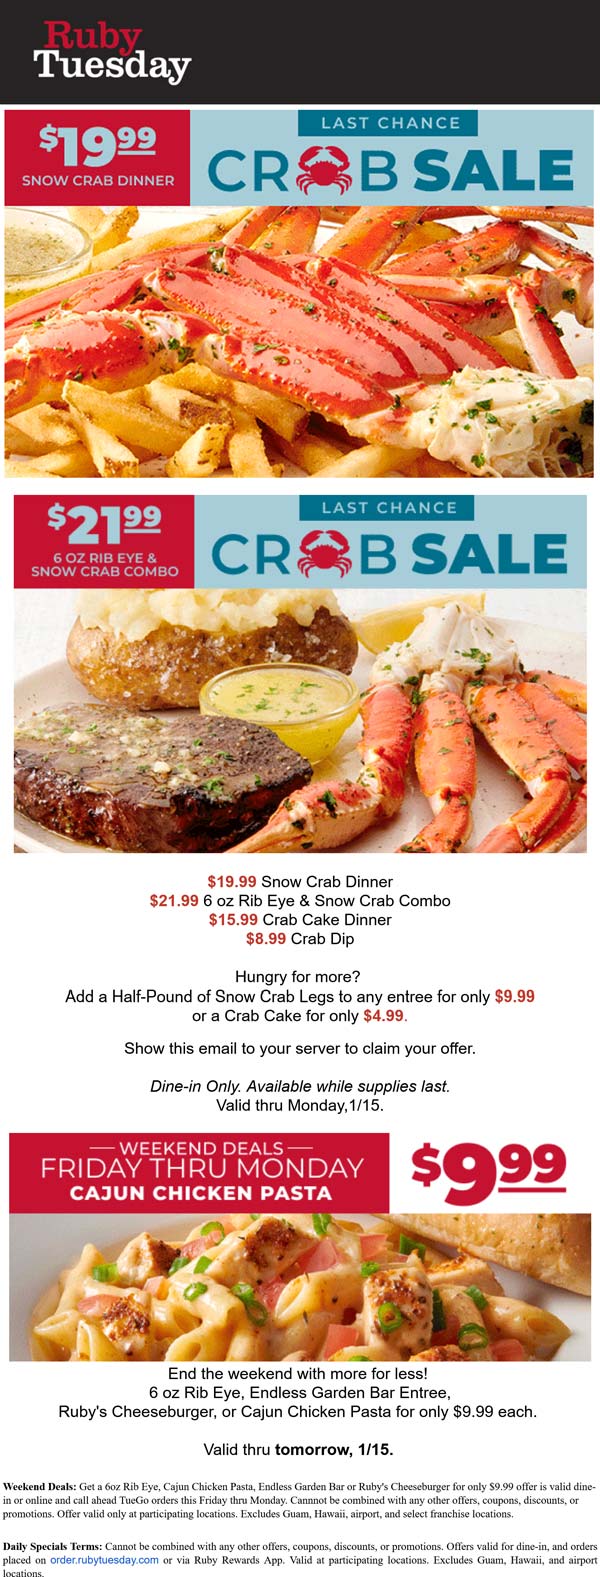 $20 snow crab dinner, $22 steak & crab + $10 bottomless garden bar at Ruby Tuesday #rubytuesday